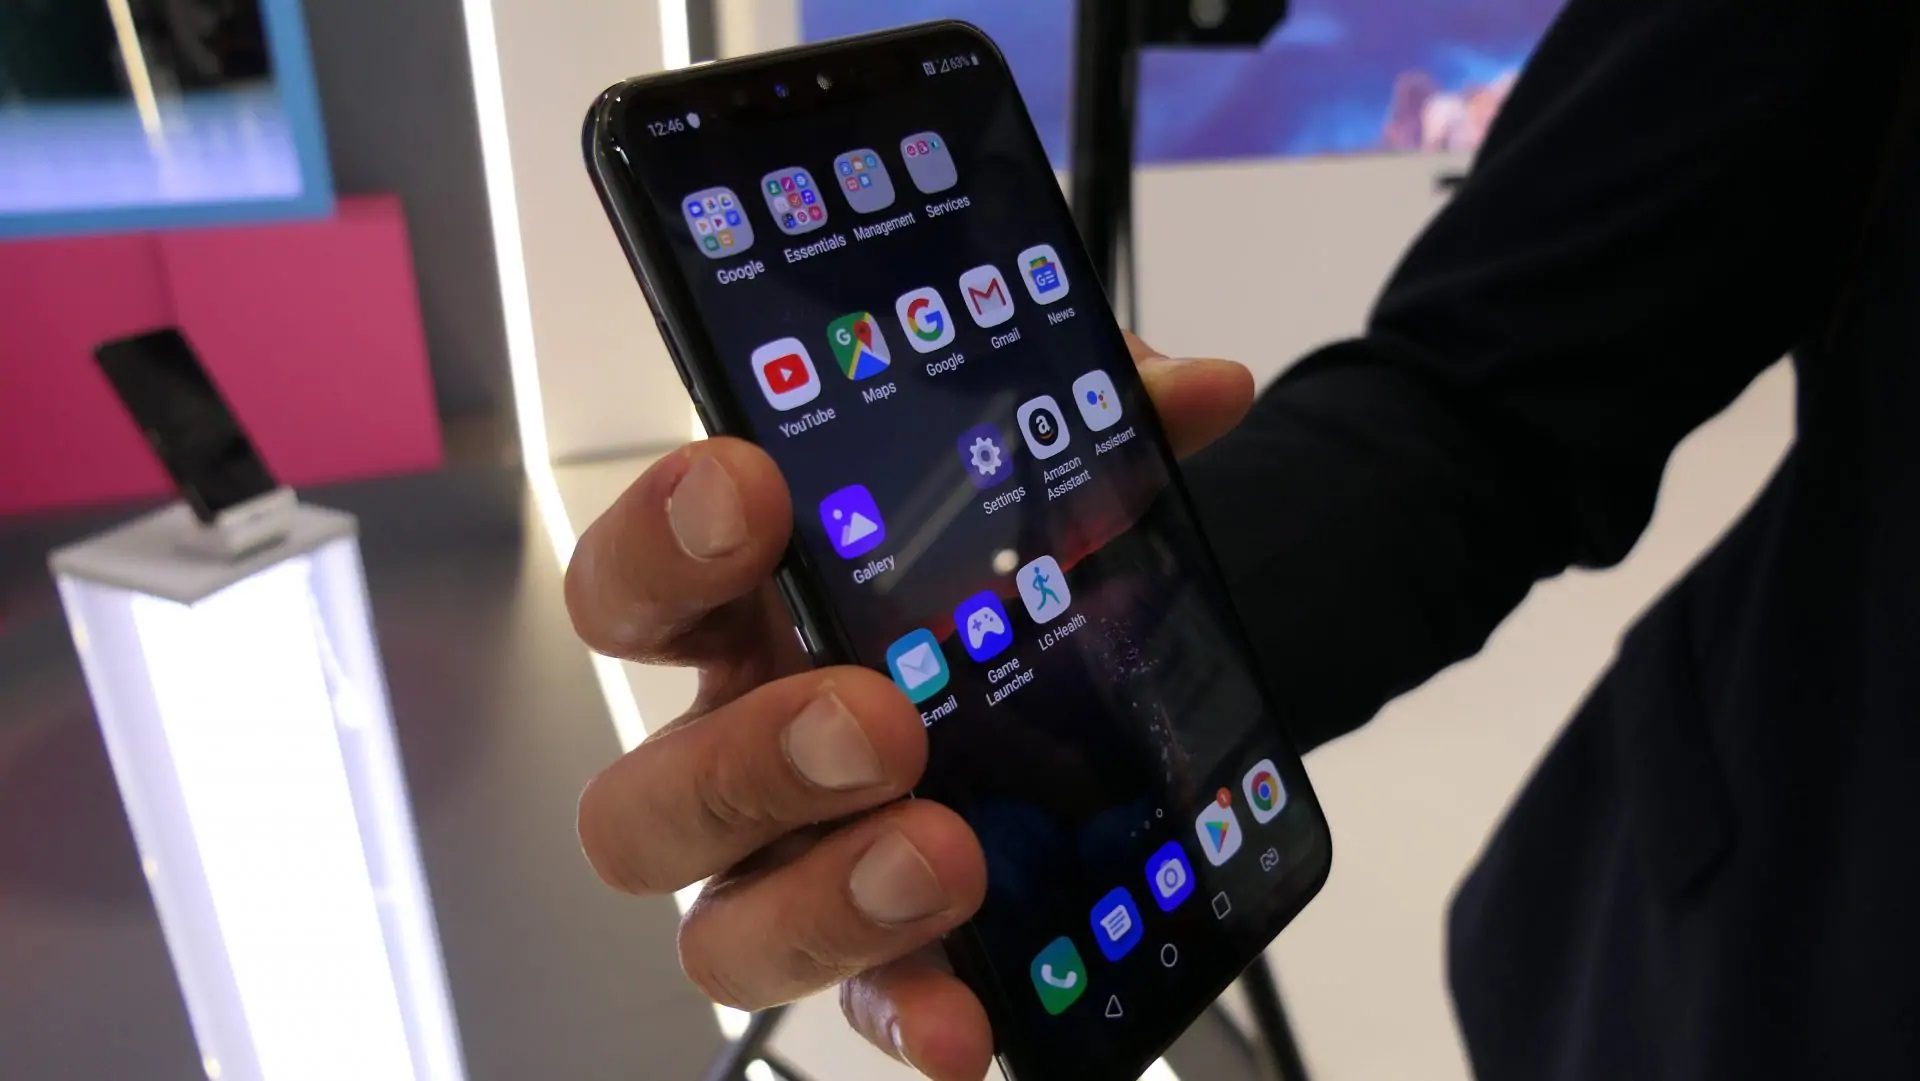 MWC 2019: LG-mobil styrs med fingergester